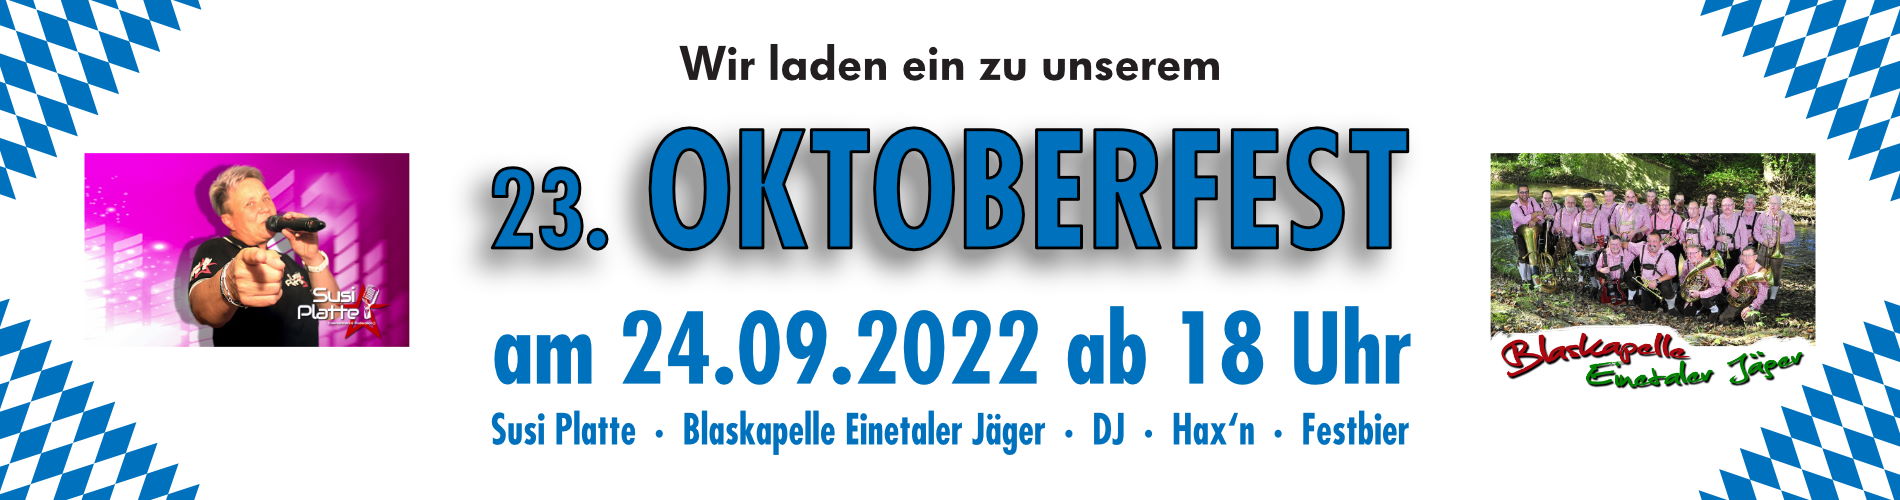 Banner Oktoberfest 2022